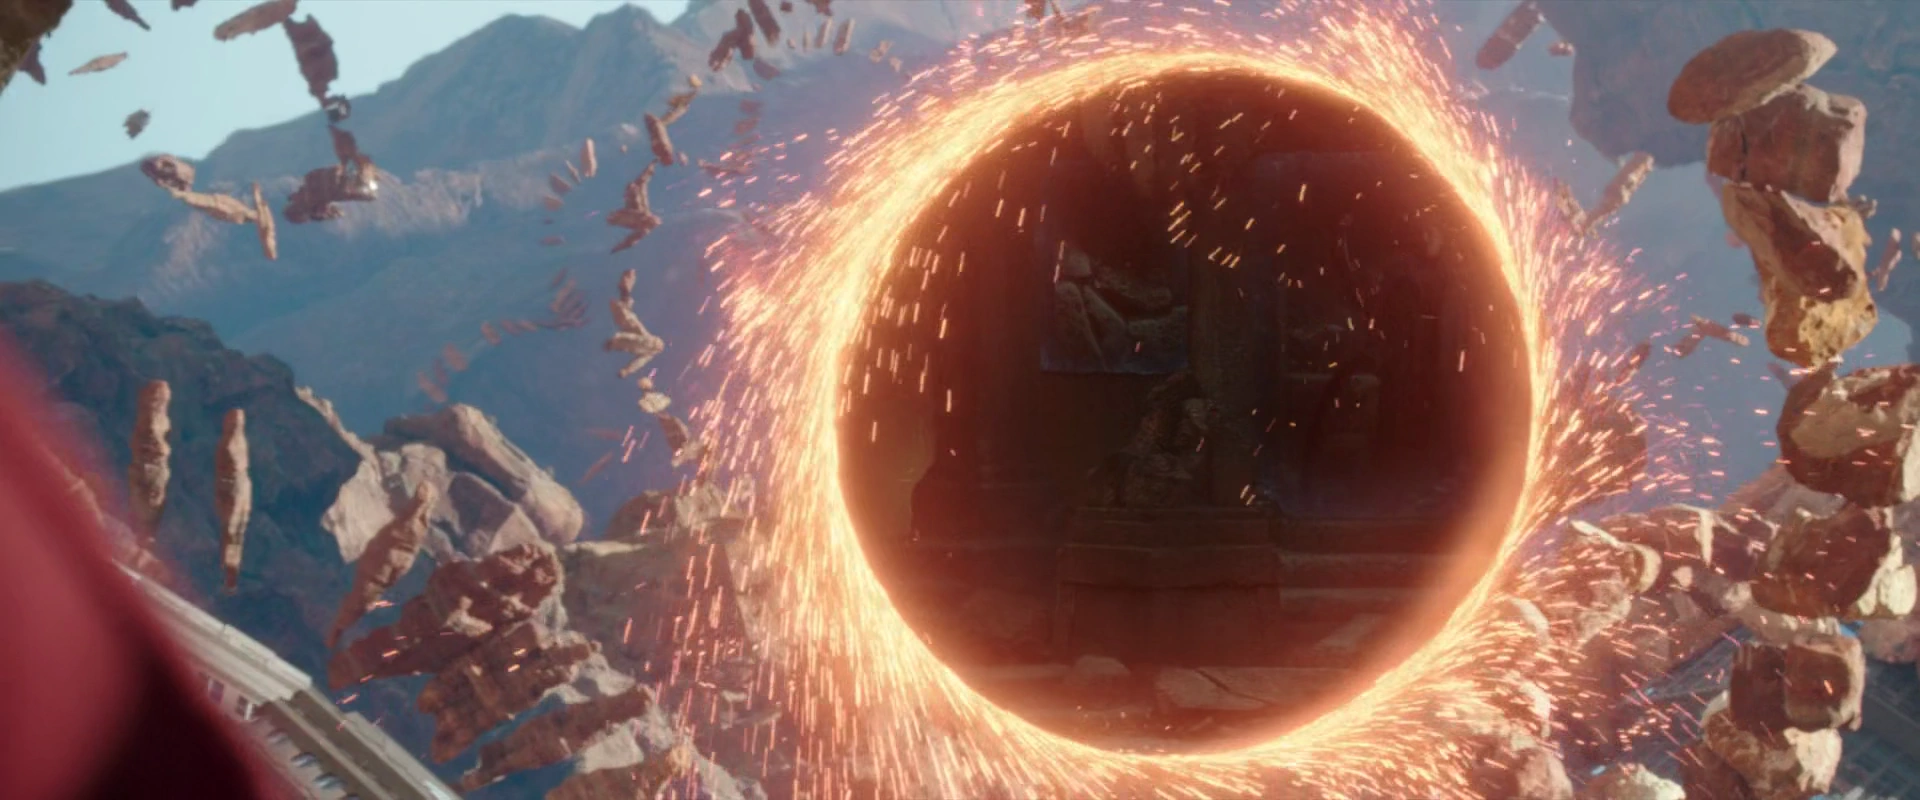 Why Dr. Strange did not cut Thanos' hand through portal?